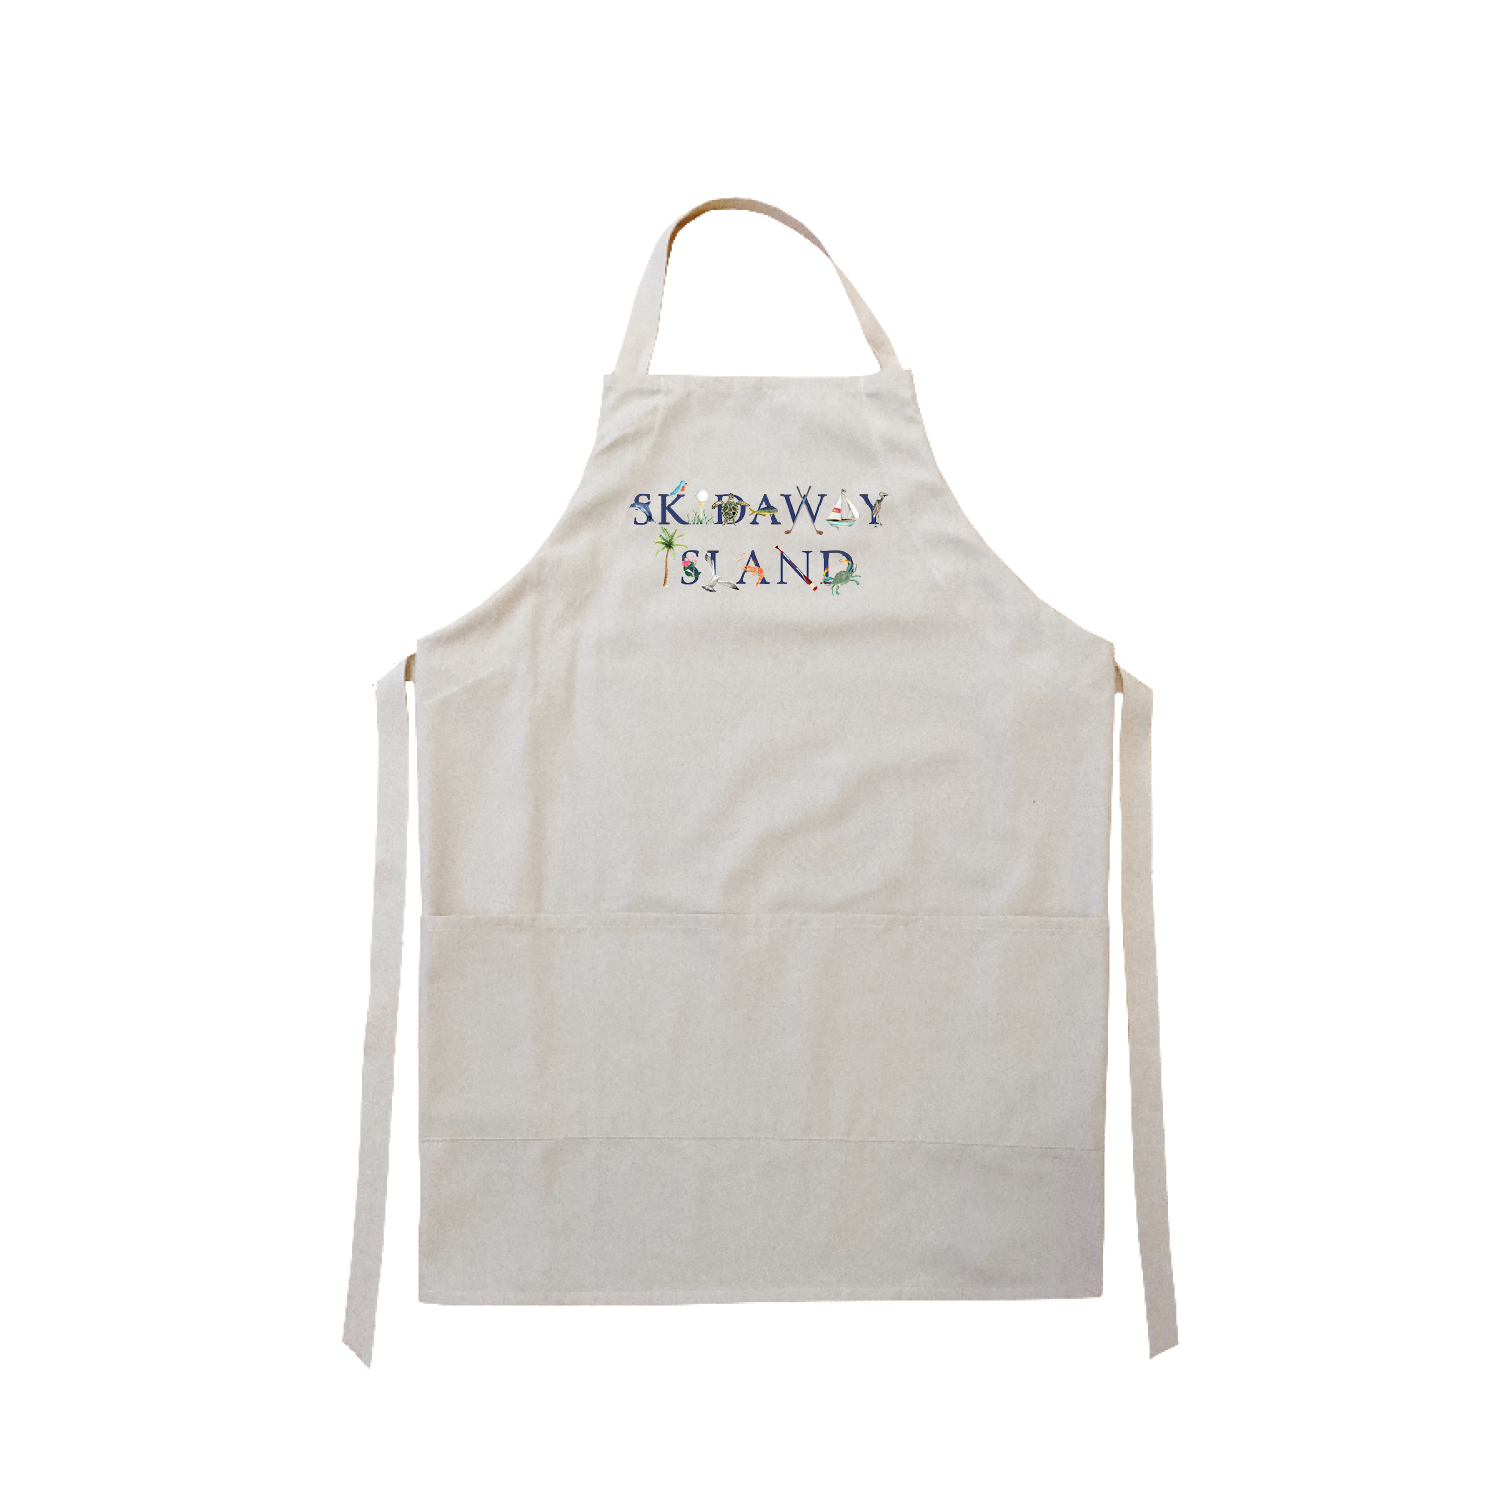 Skidaway Island apron